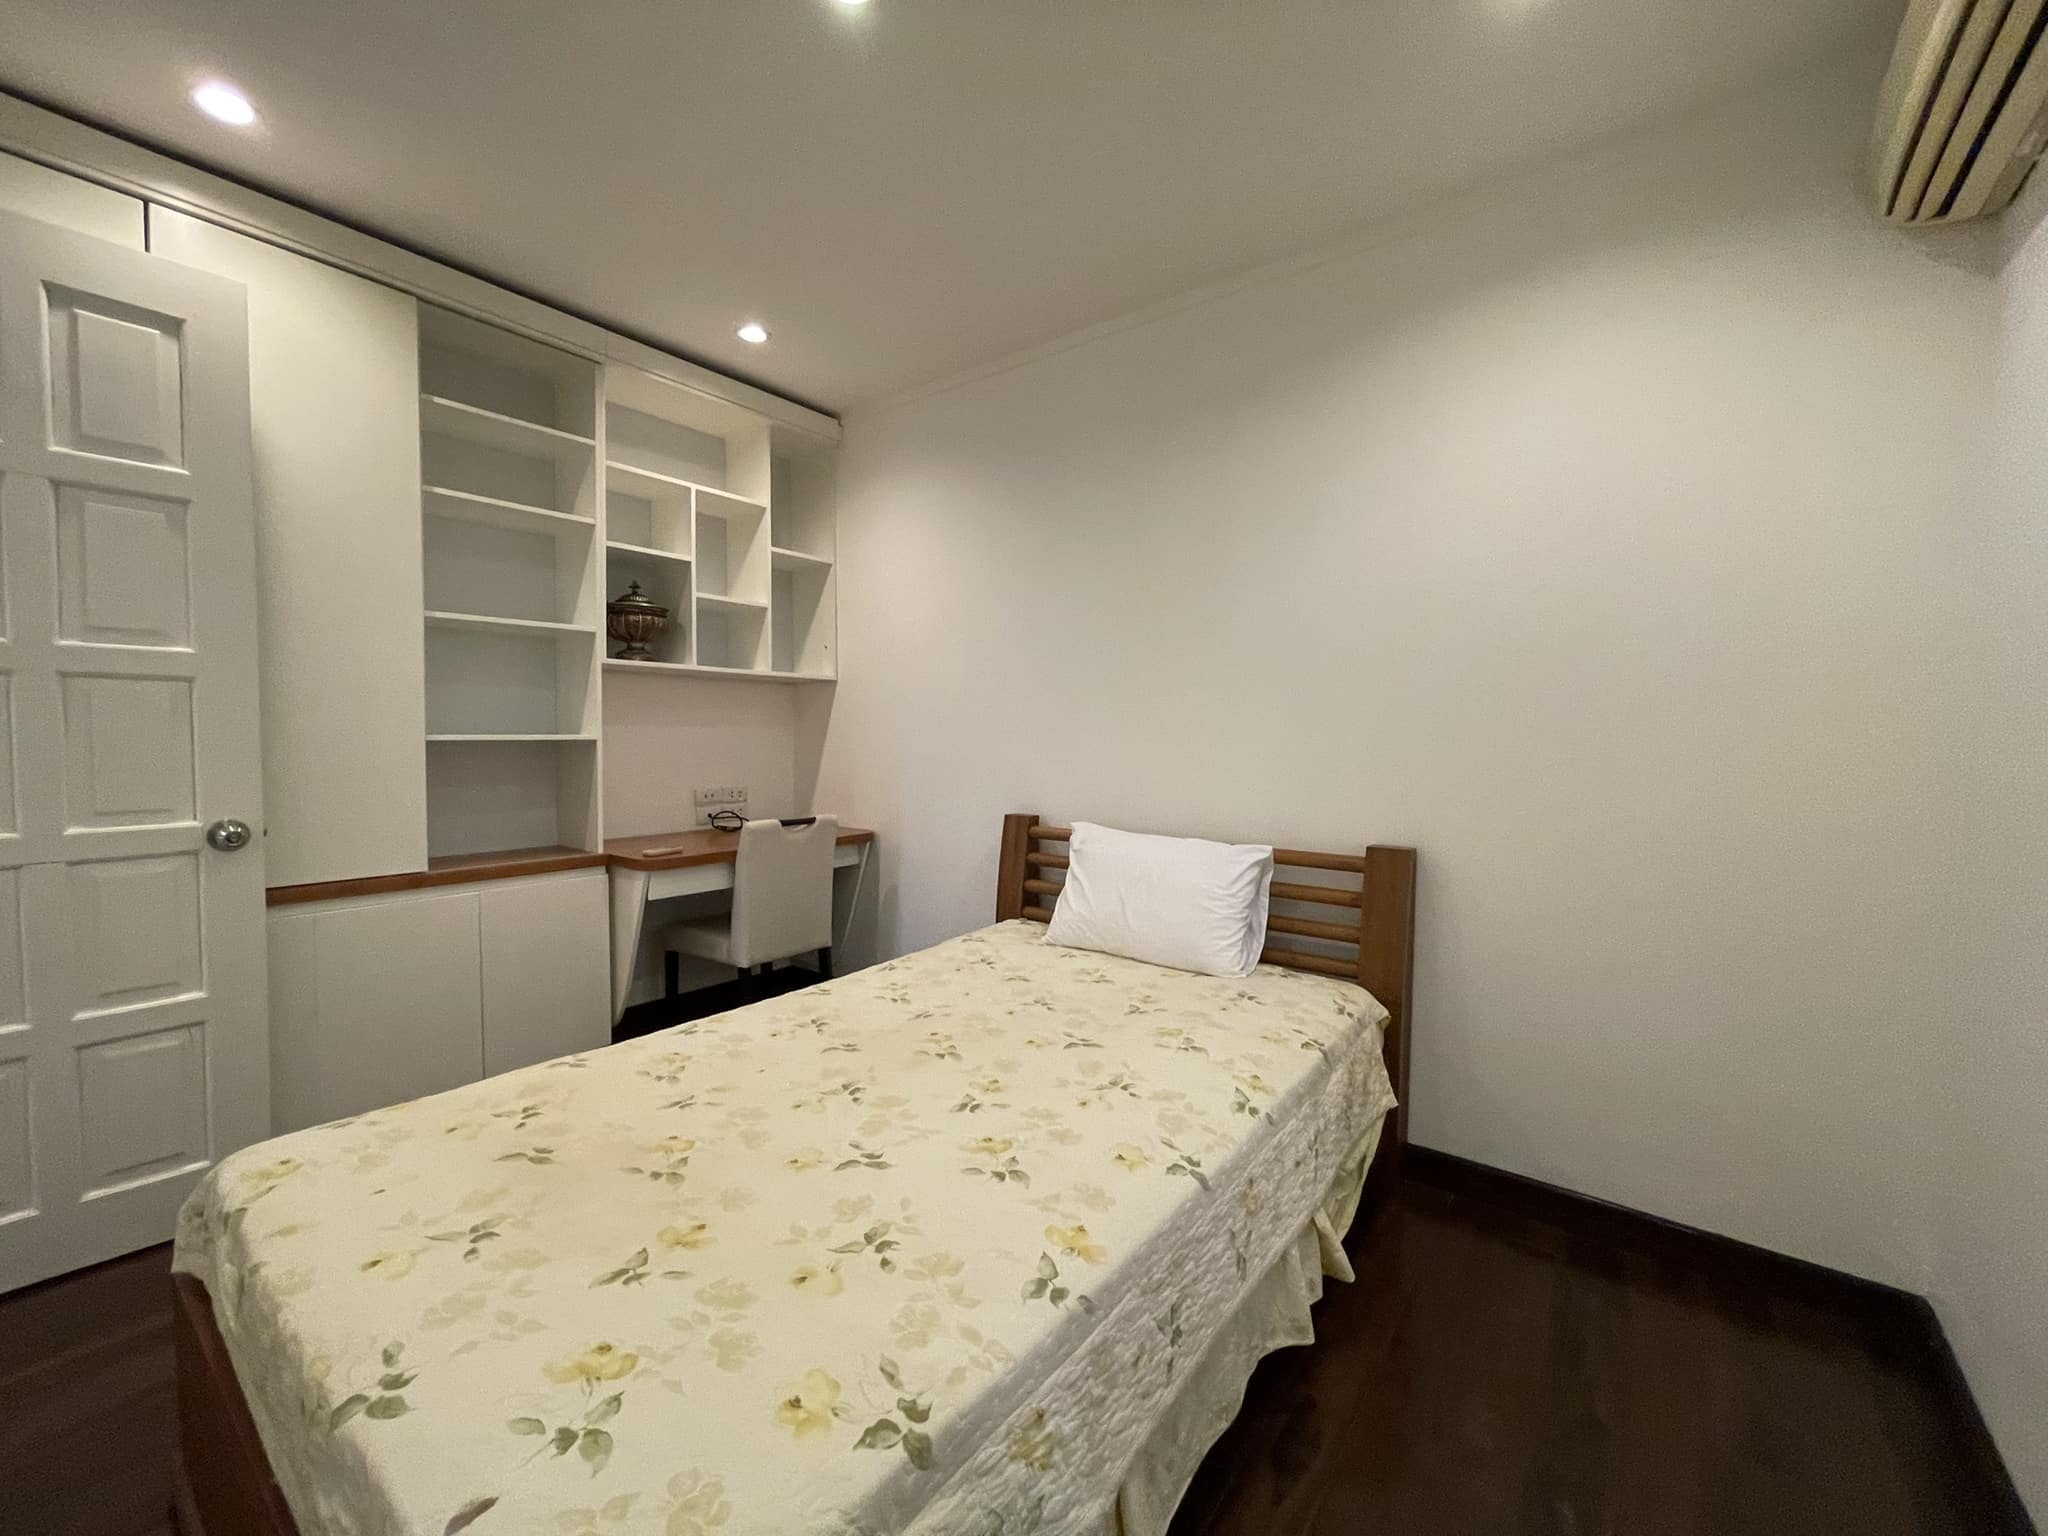 Glamorous 3-bedroom apartment in G3 Ciputra for rent 10